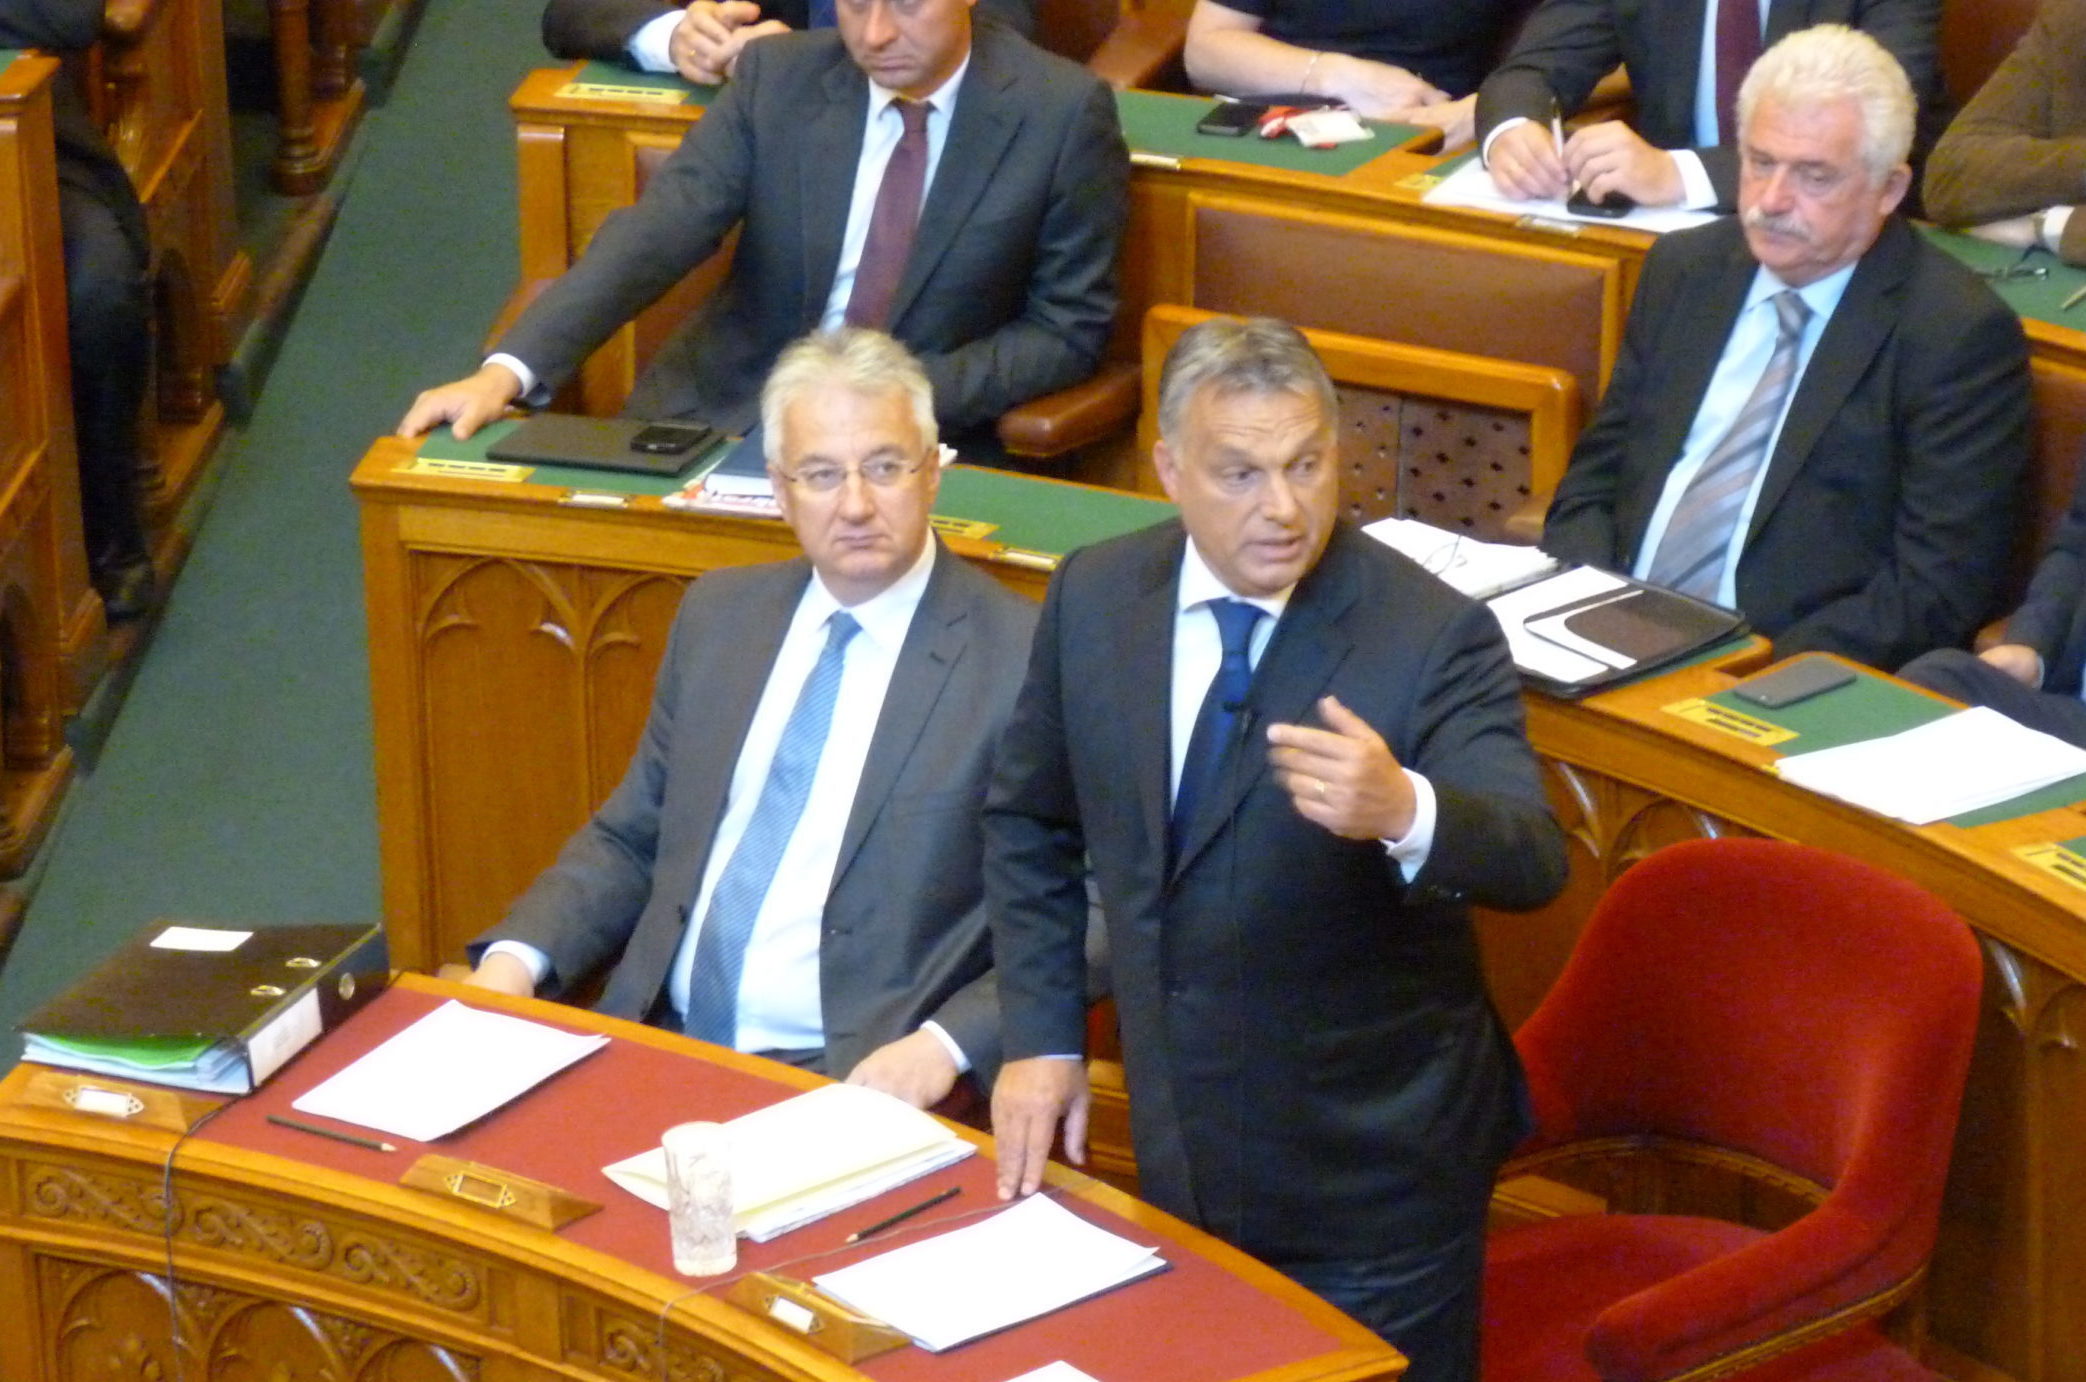 Viktor_Orban_adressing_the_House_of_Commons_-_2015.09.21_3-1-scaled-e1609610835226